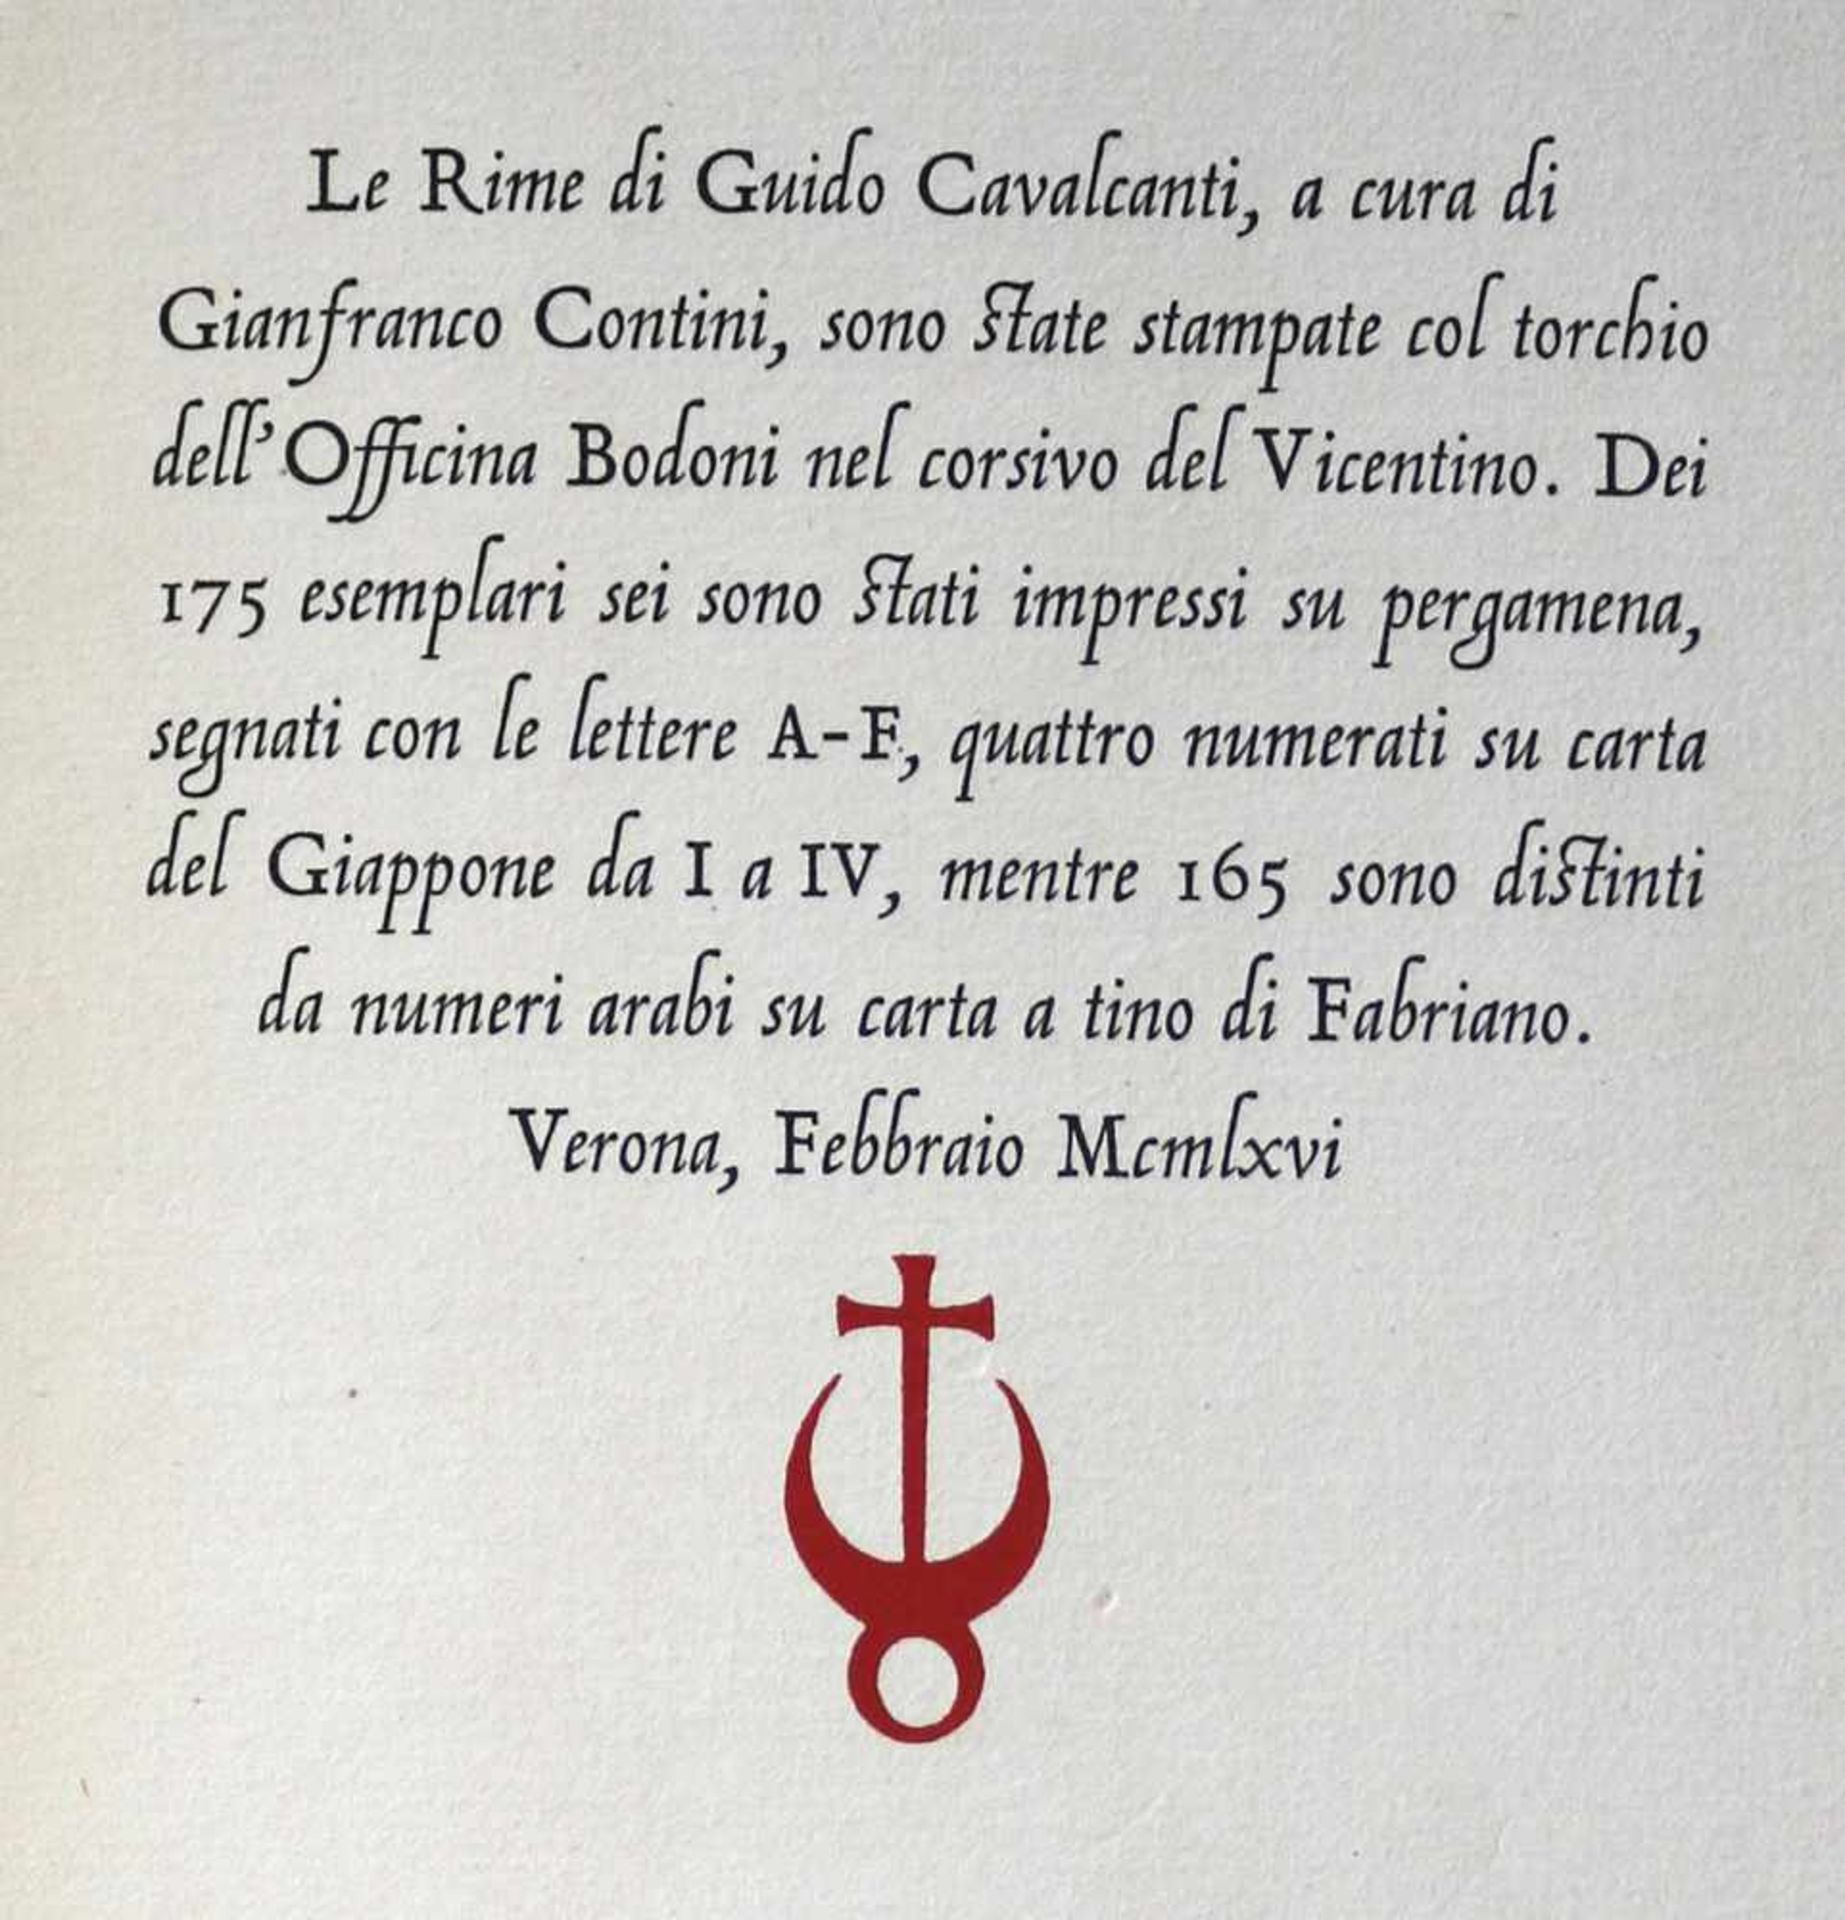 Cavalcanti,G.Le Rime. Verona, Officina Bodoni 1966. Mit Titelvign. u. Init. in Rot. 110 S., 2 Bl.